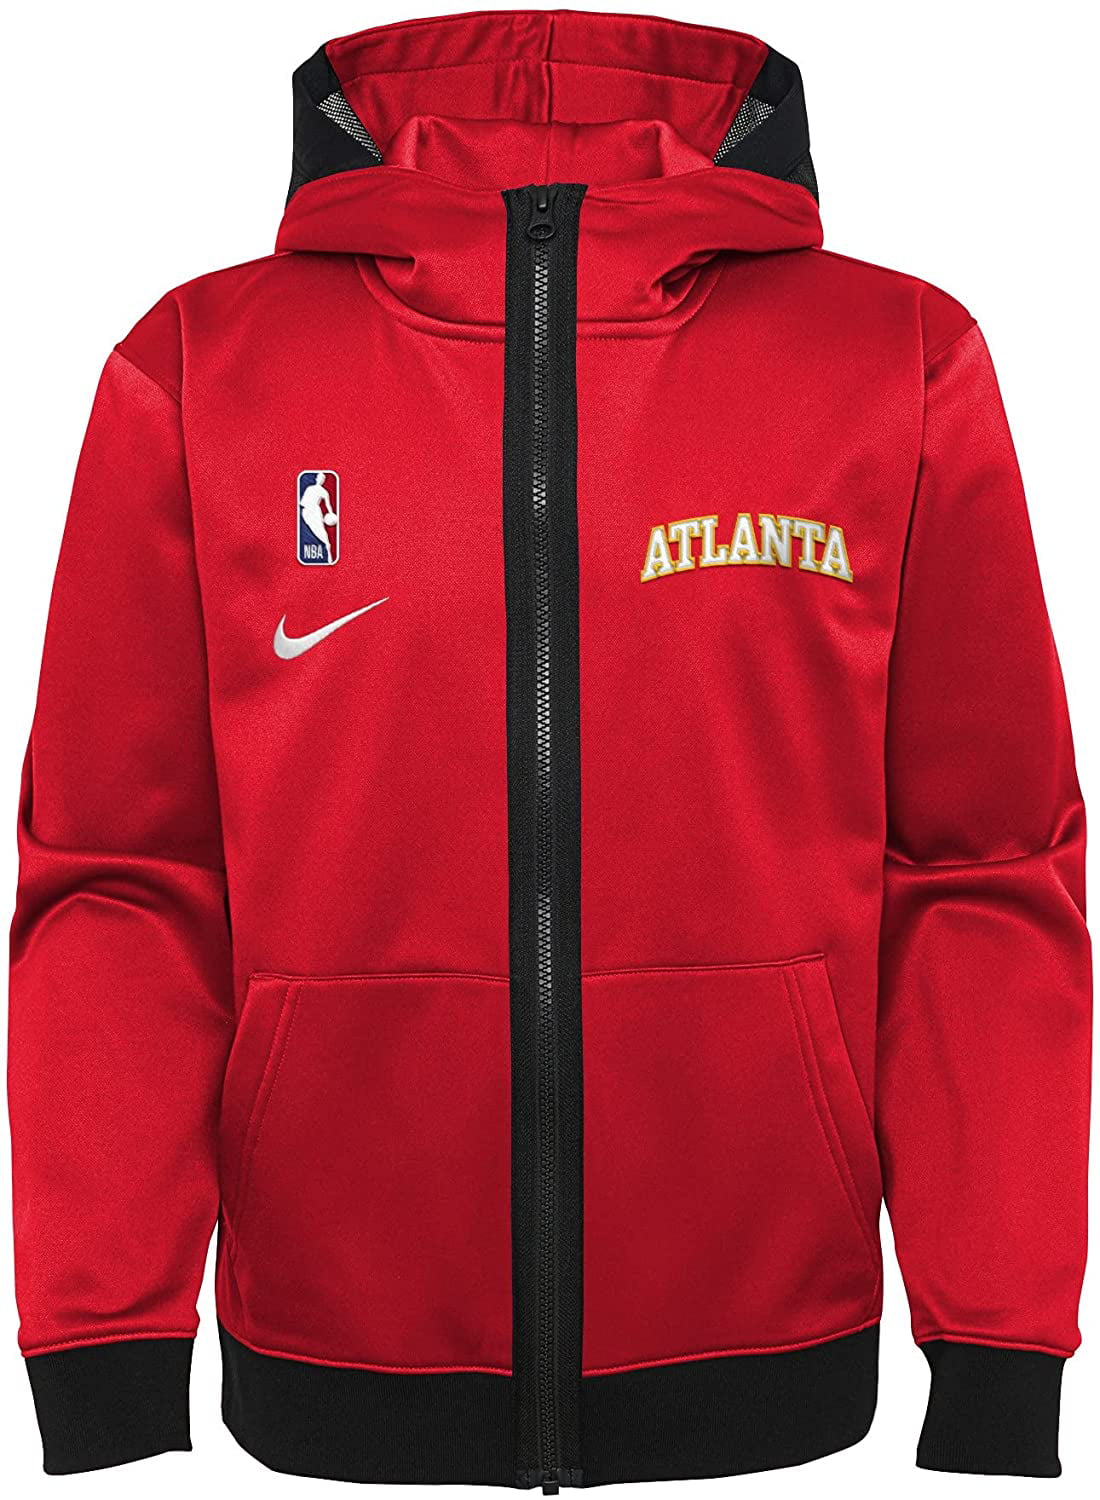 Men's NBA Atlanta Hawks City Edition DNA Jacket